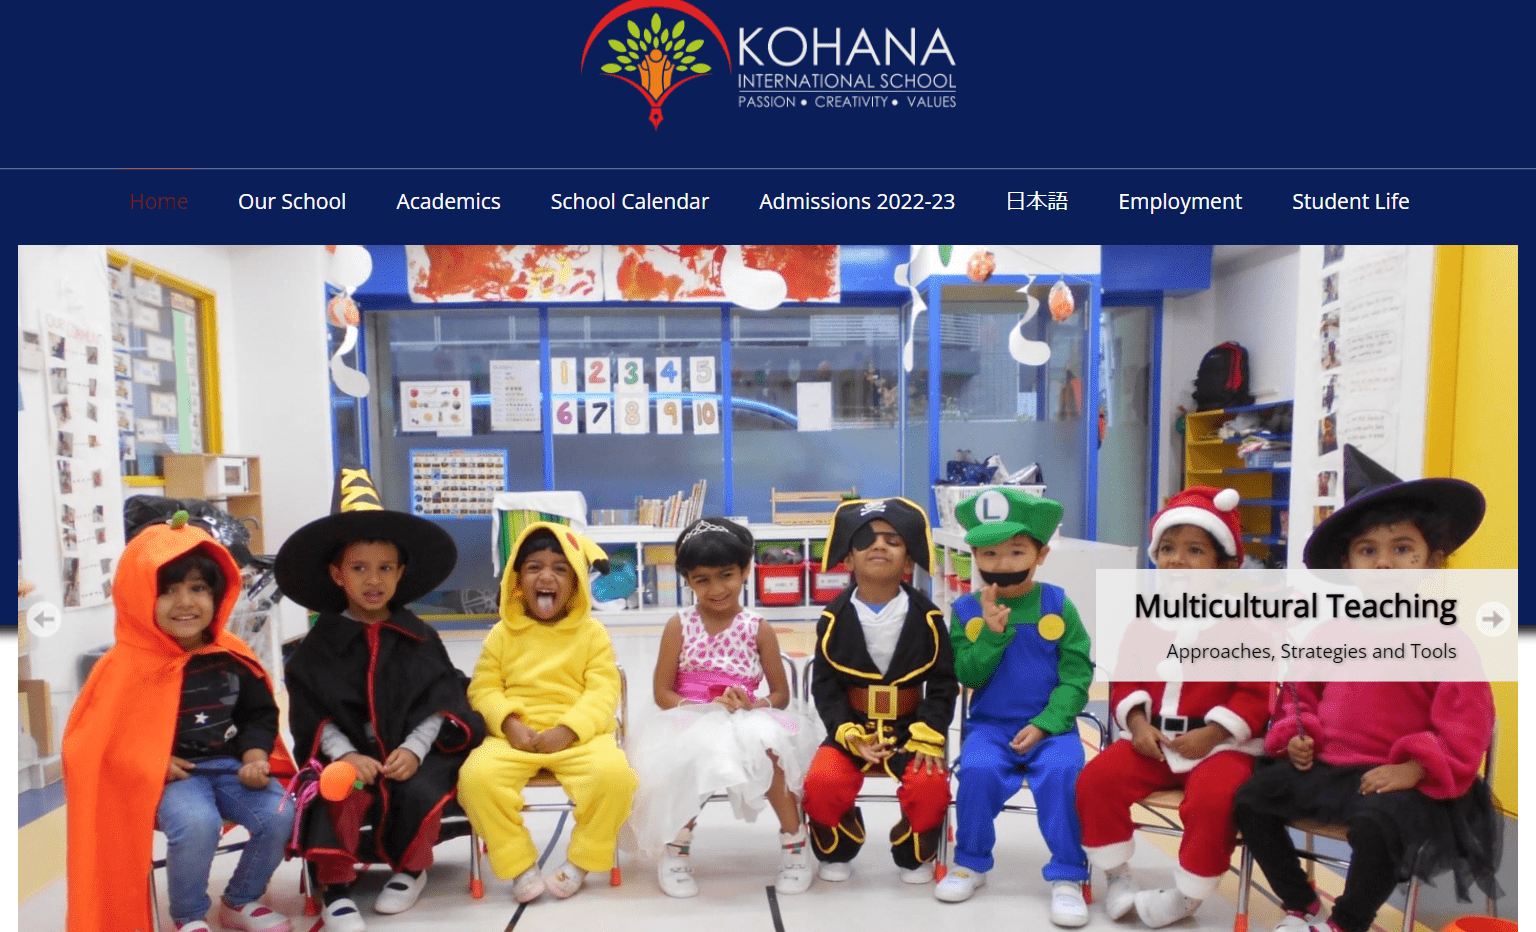 Kohana International School